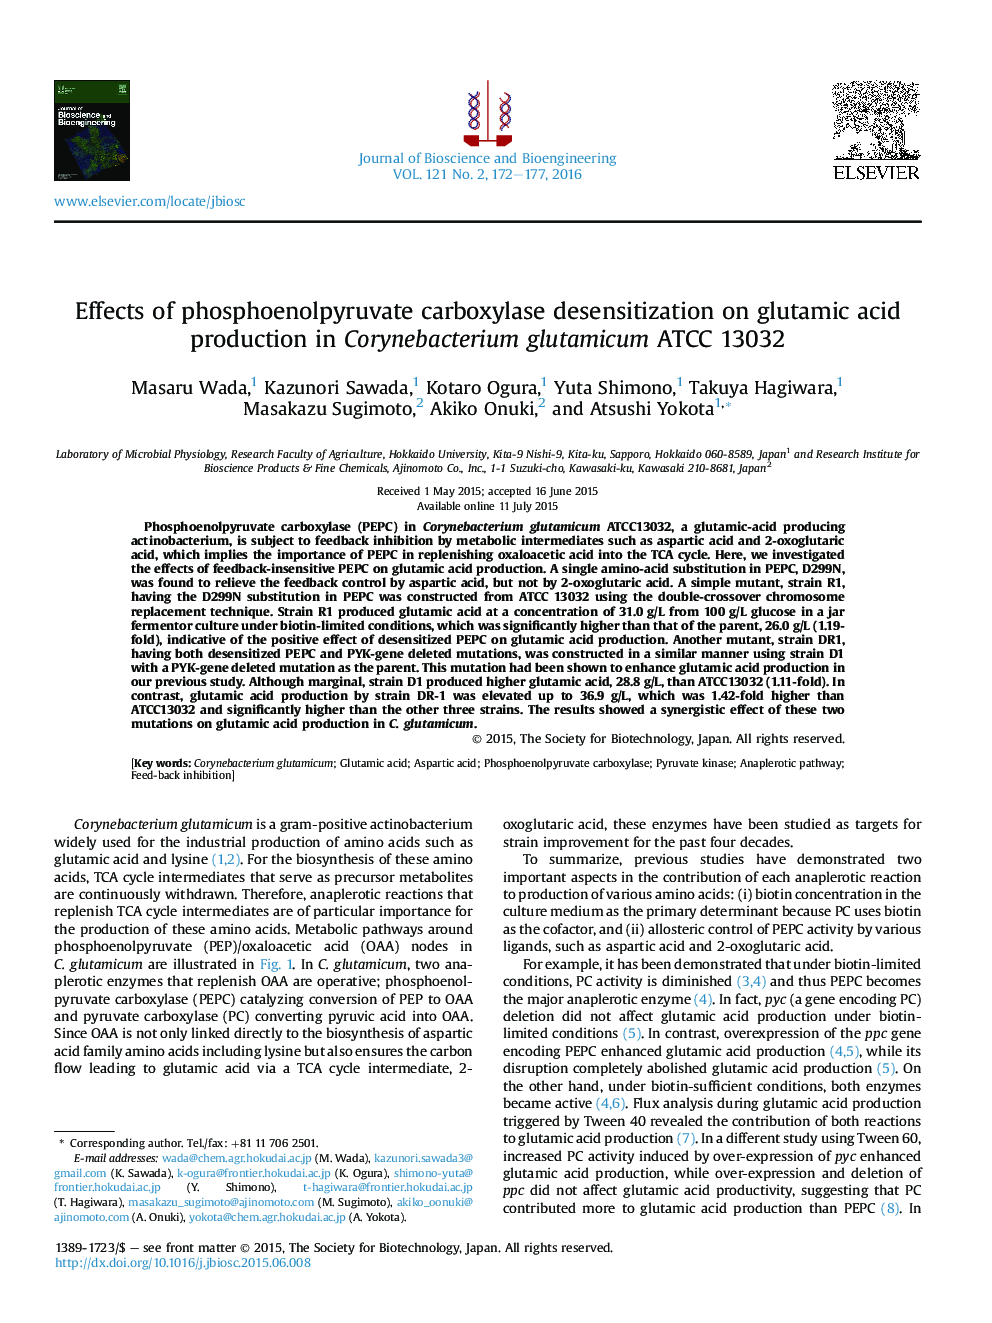 Effects of phosphoenolpyruvate carboxylase desensitization on glutamic acid production in Corynebacterium glutamicum ATCC 13032